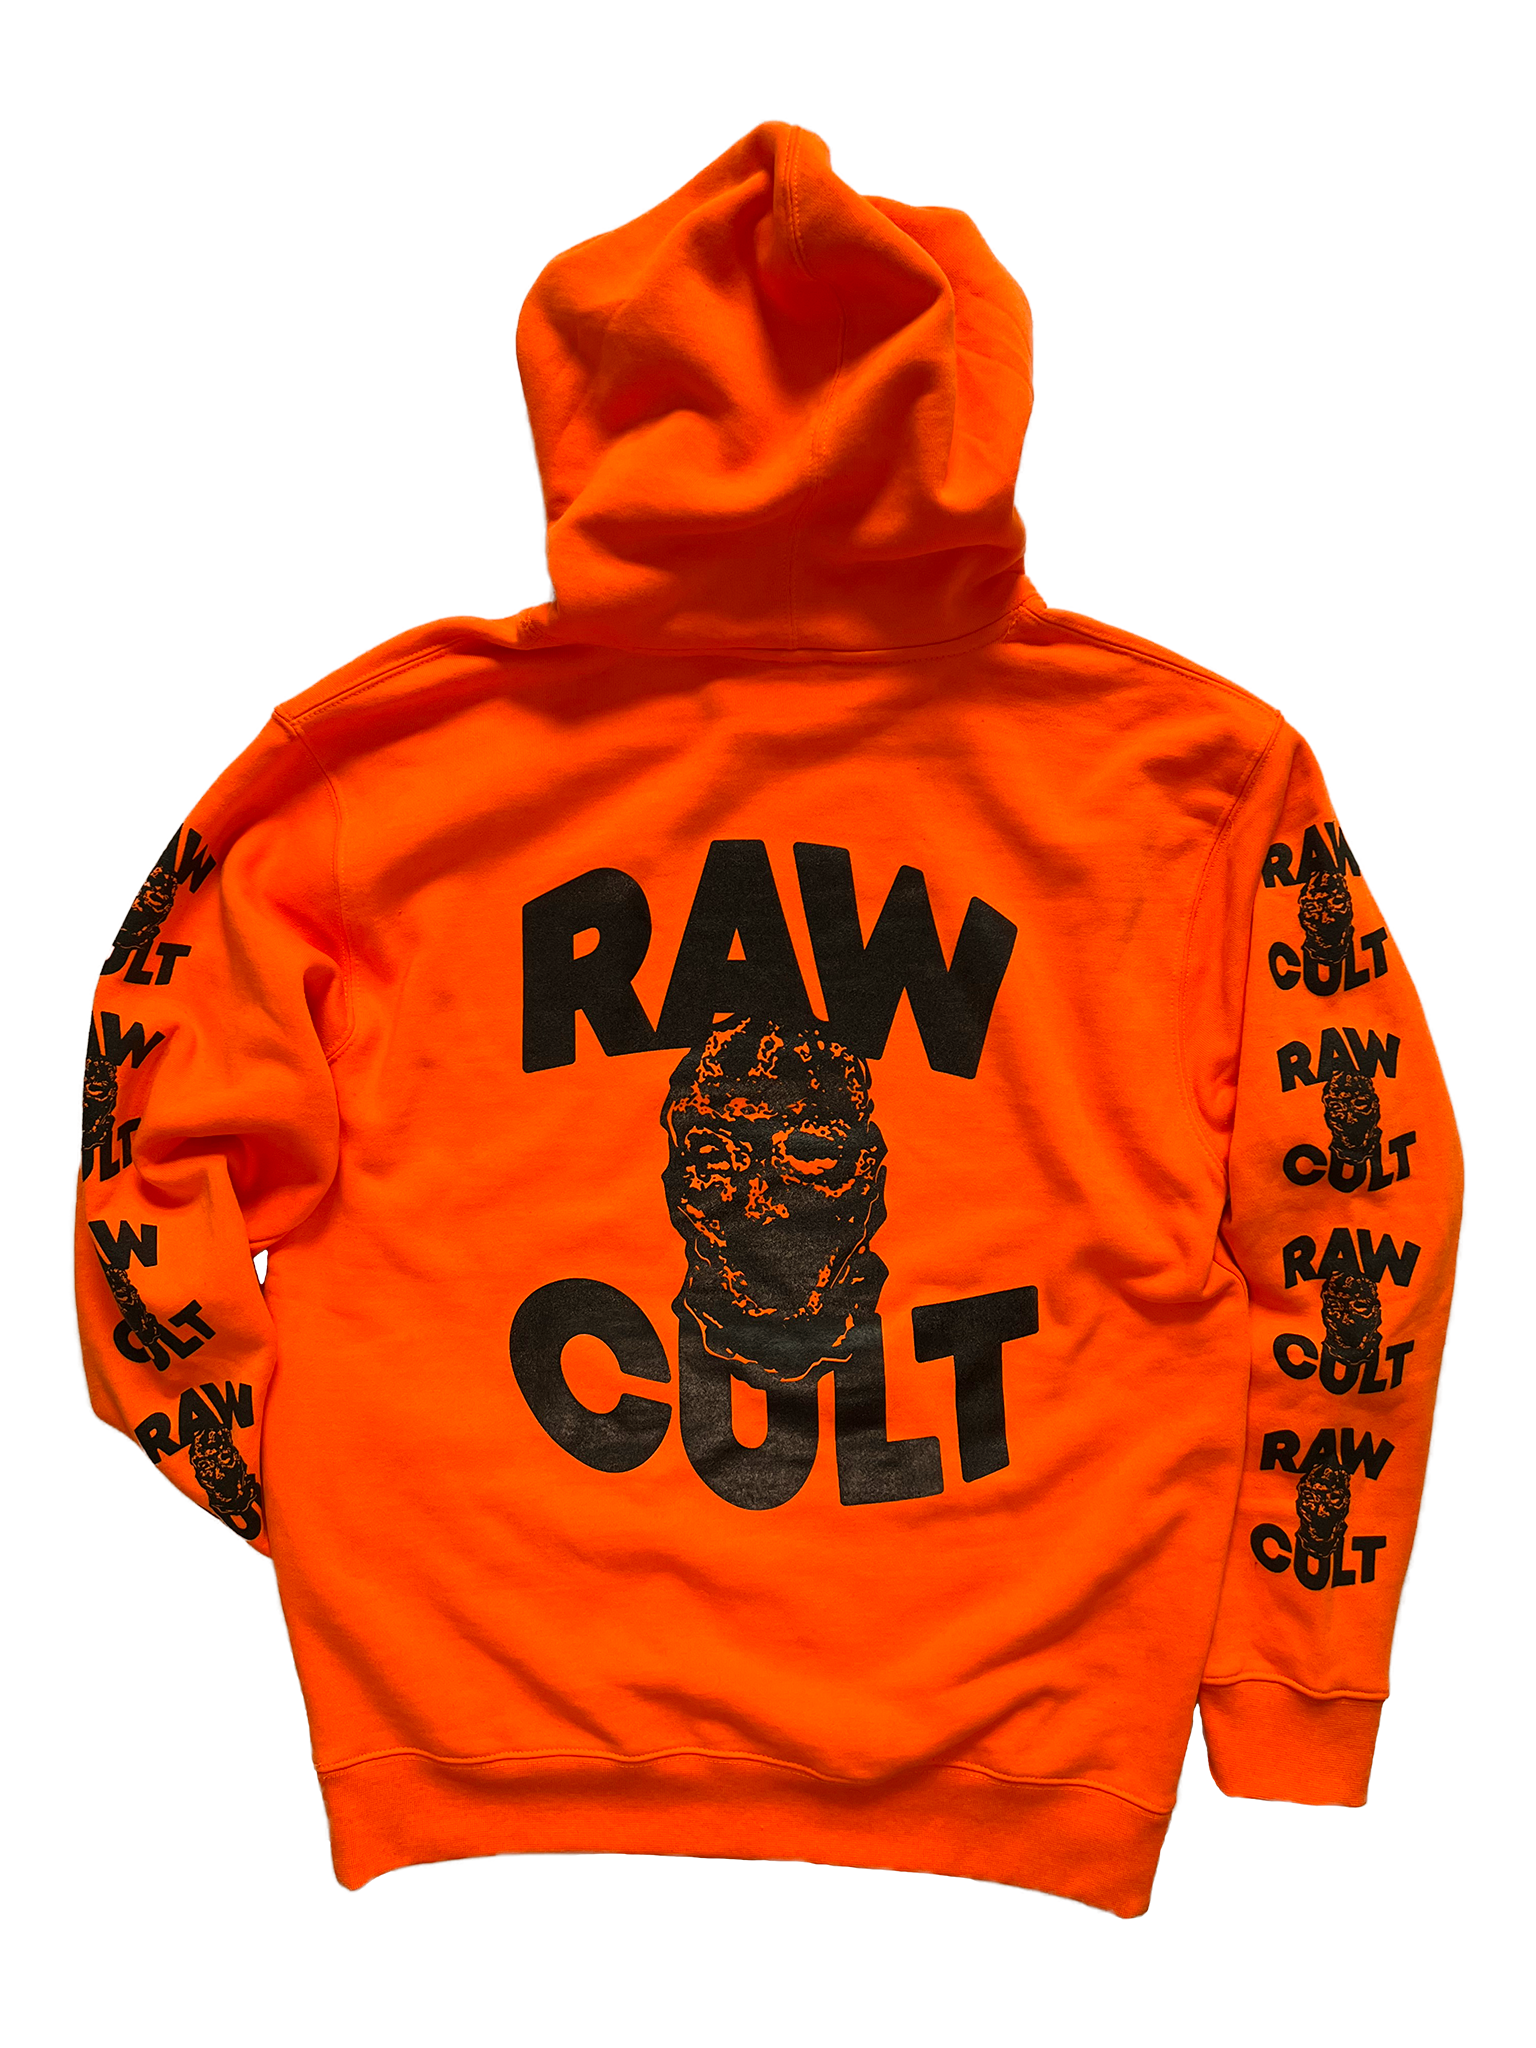 RAW CULT | Mask CULT Hoodie - Black on Orange